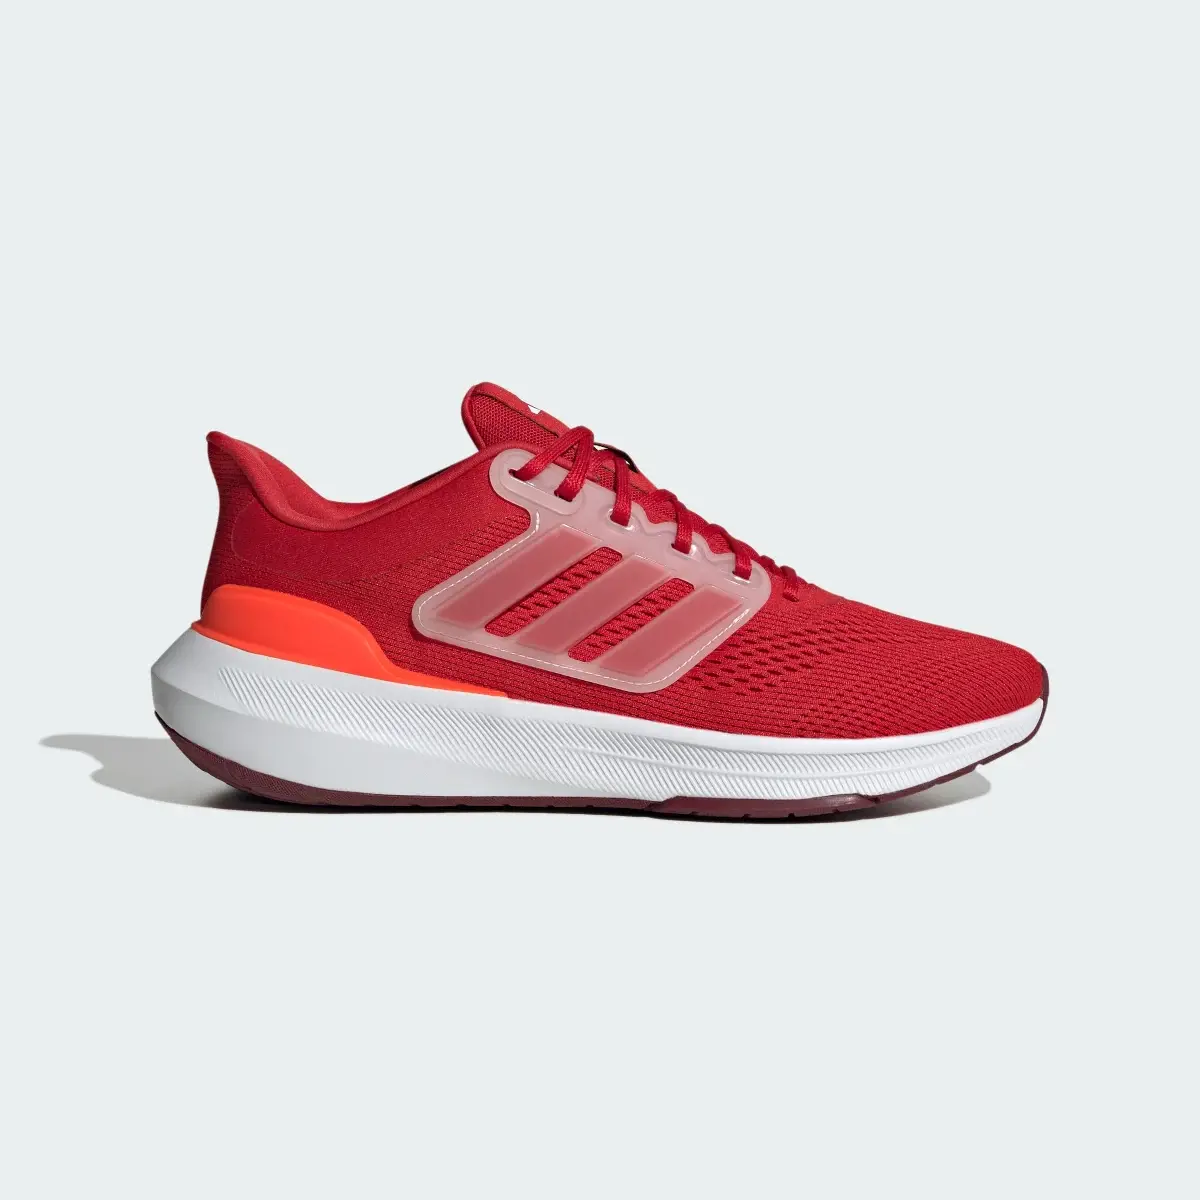 Adidas Ultrabounce Running Shoes. 2